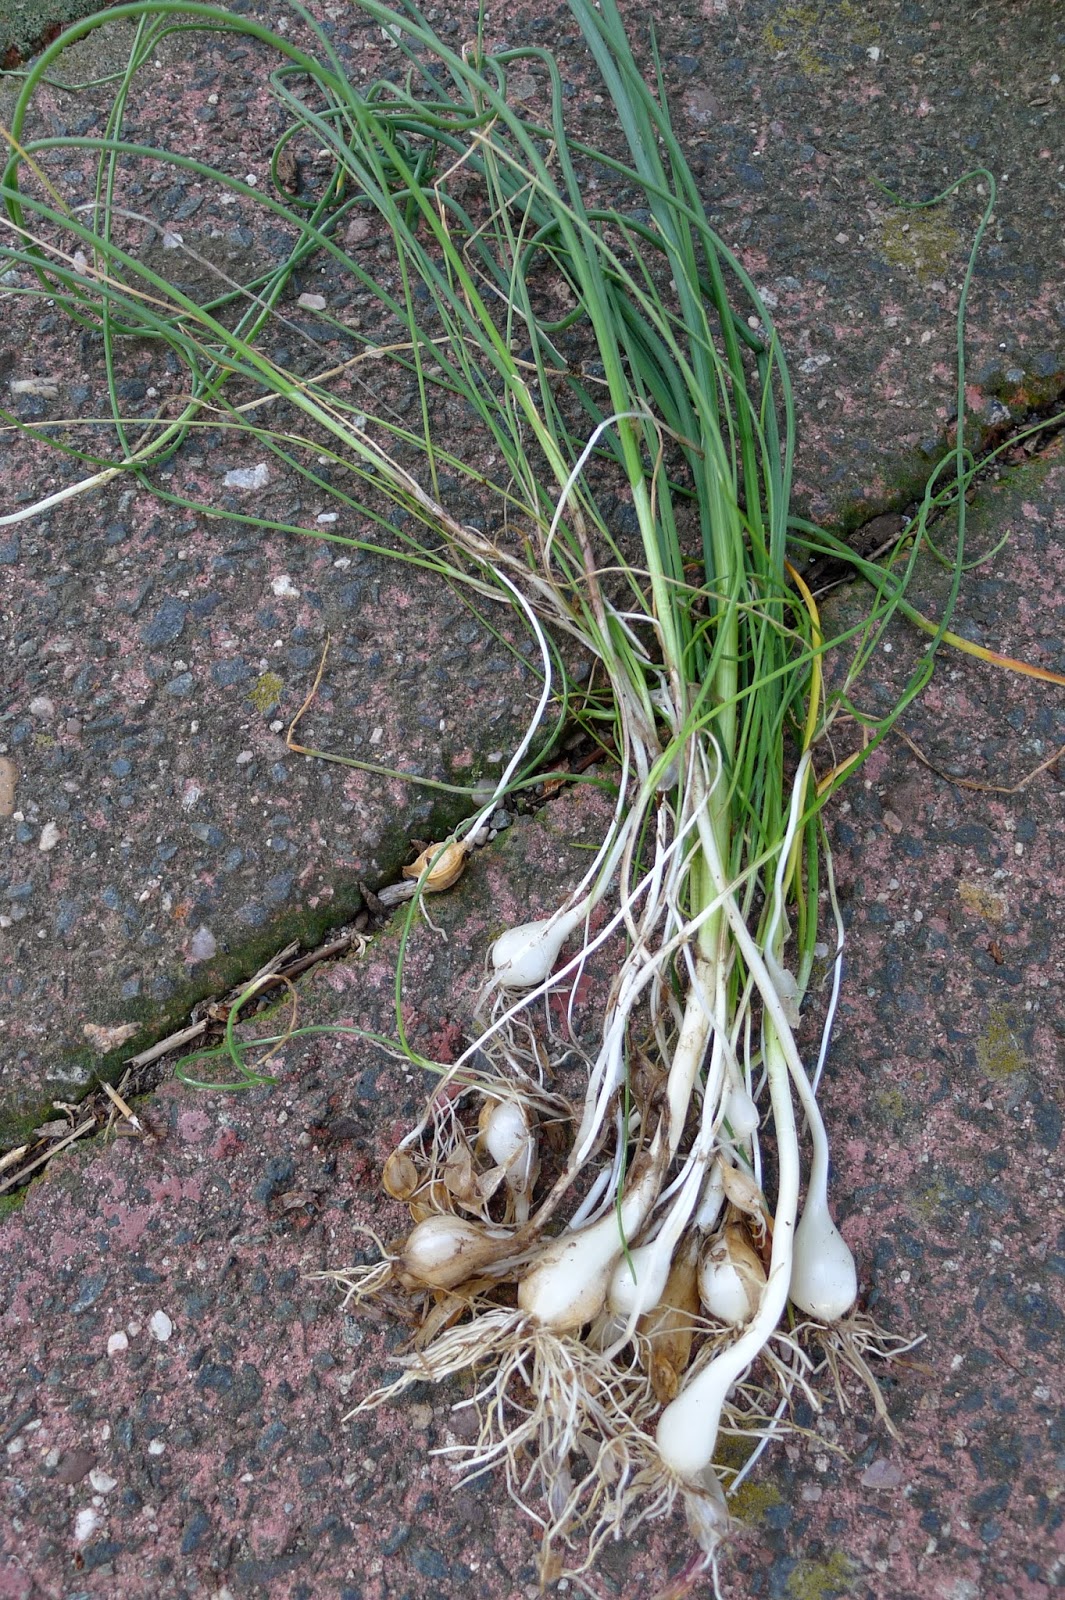 Foraging for wild garlic, recipes